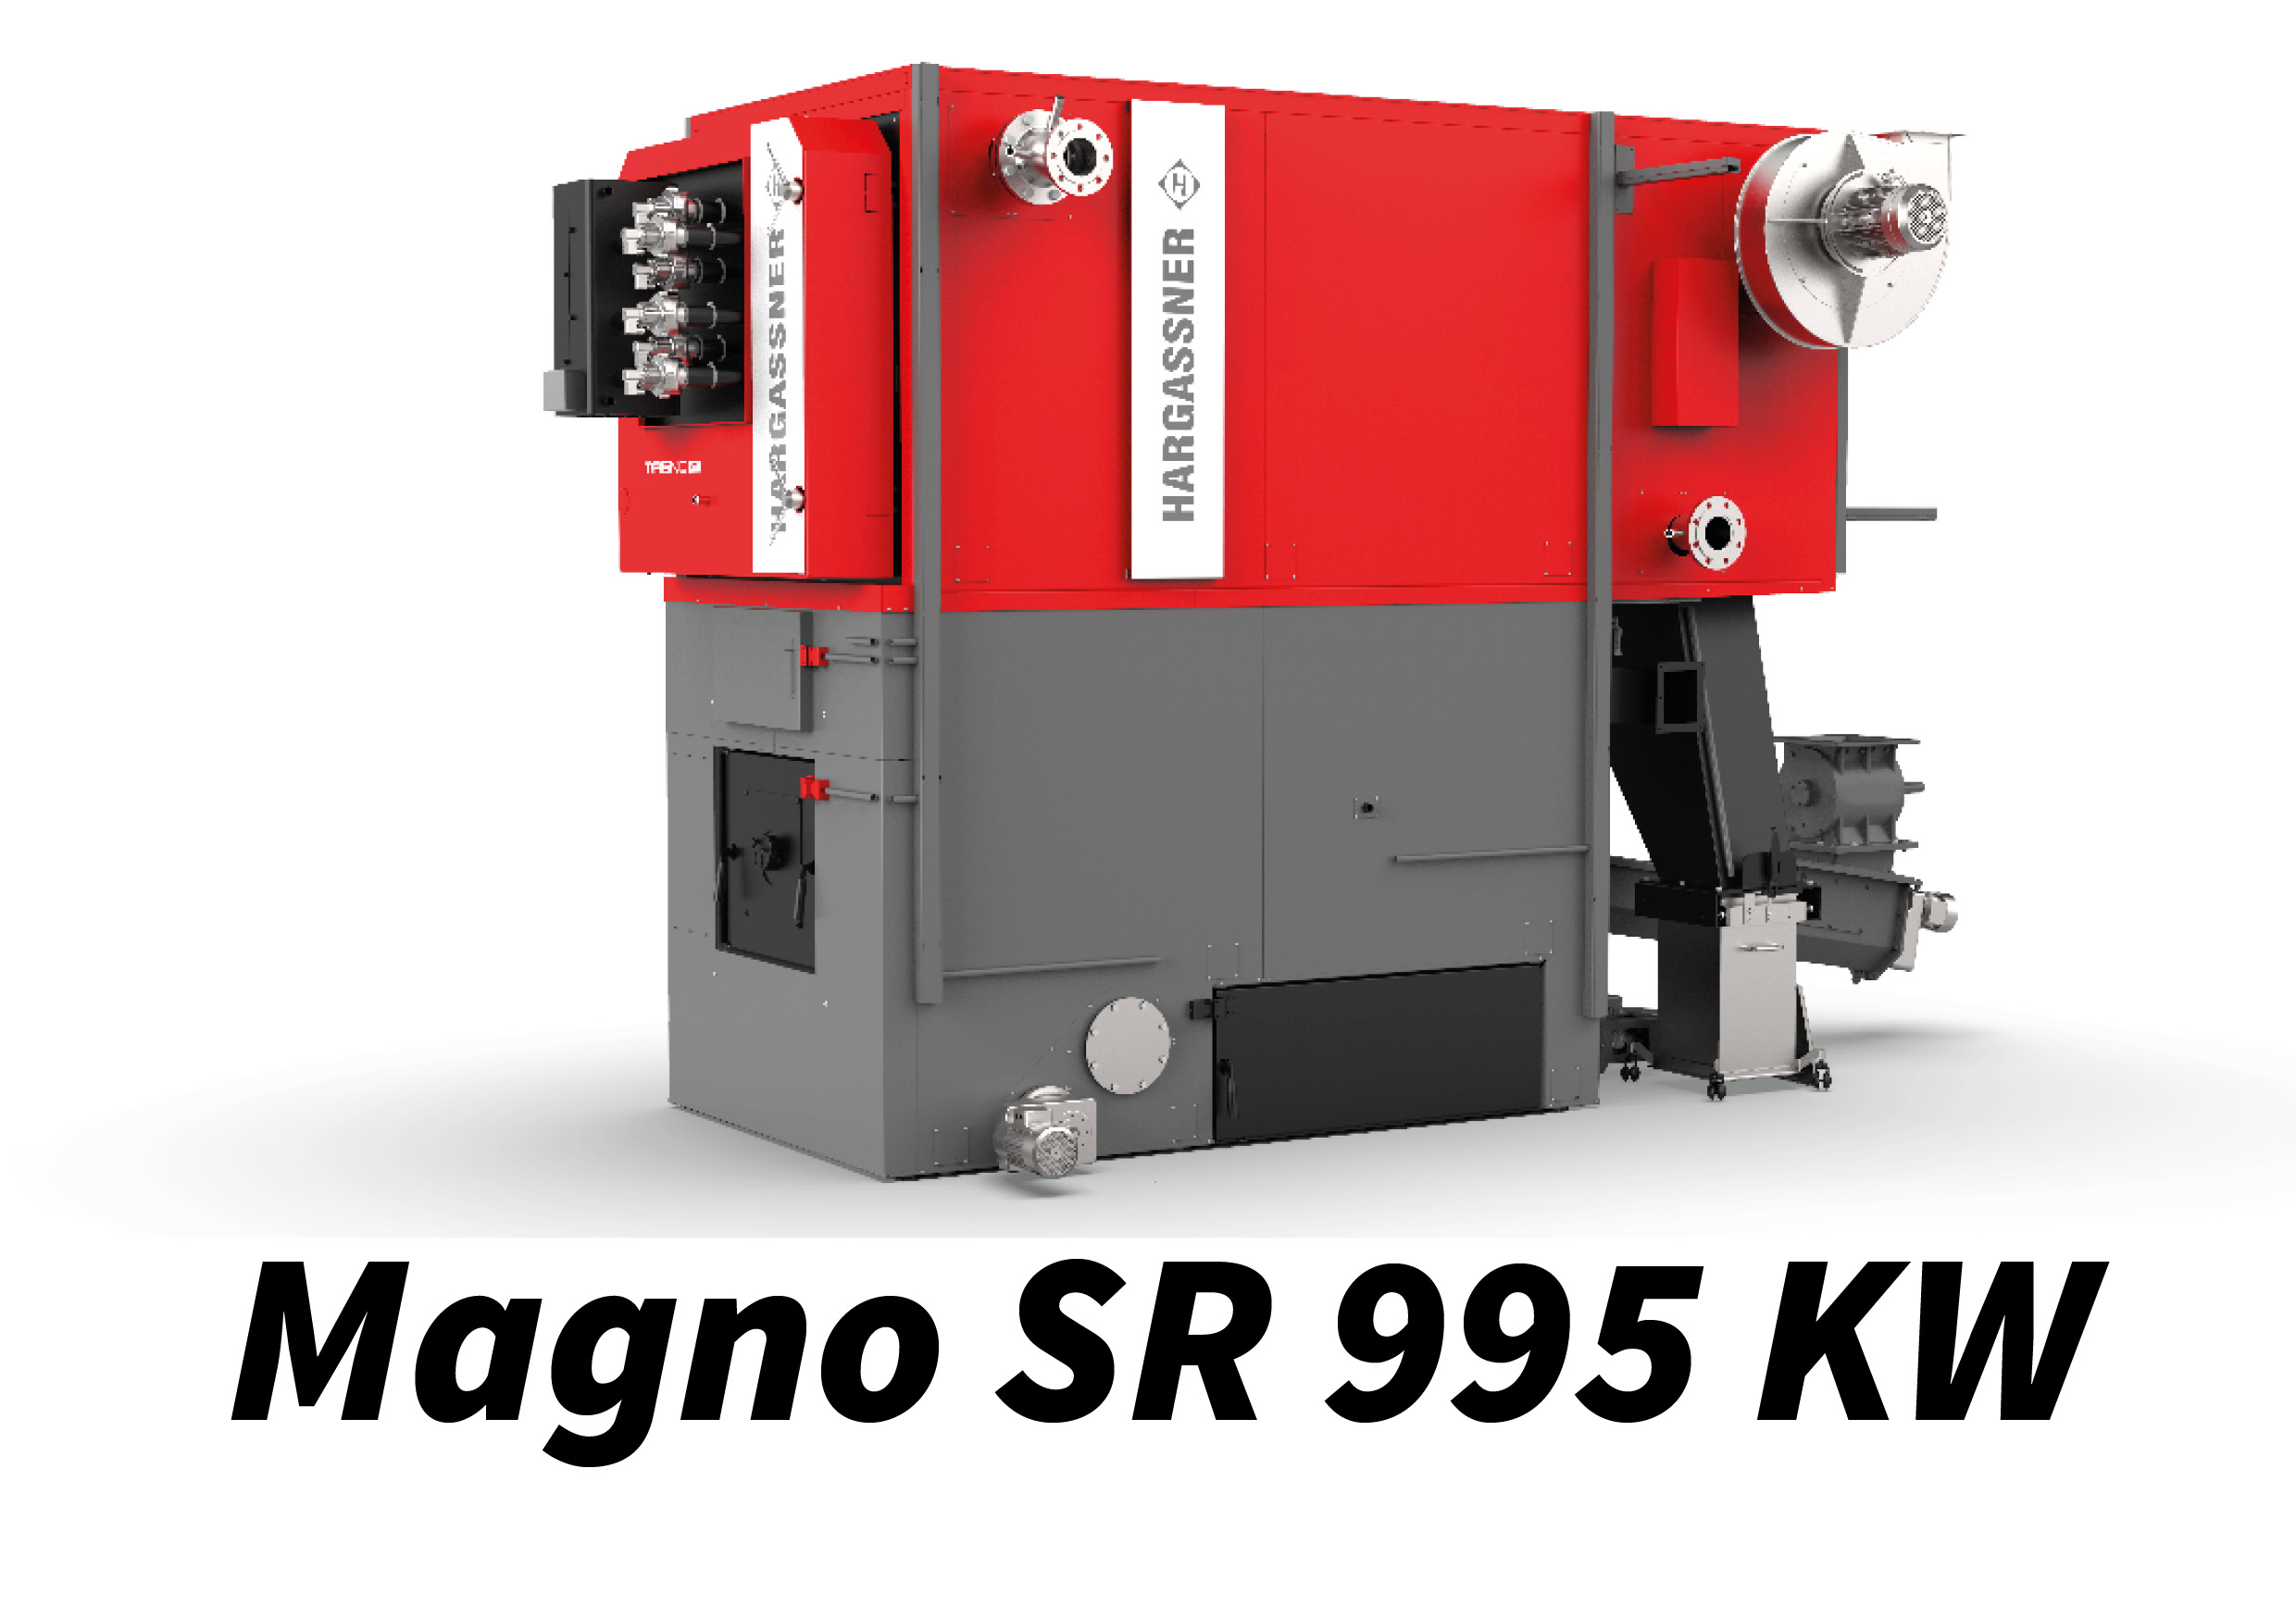 Magno SR 995 kW